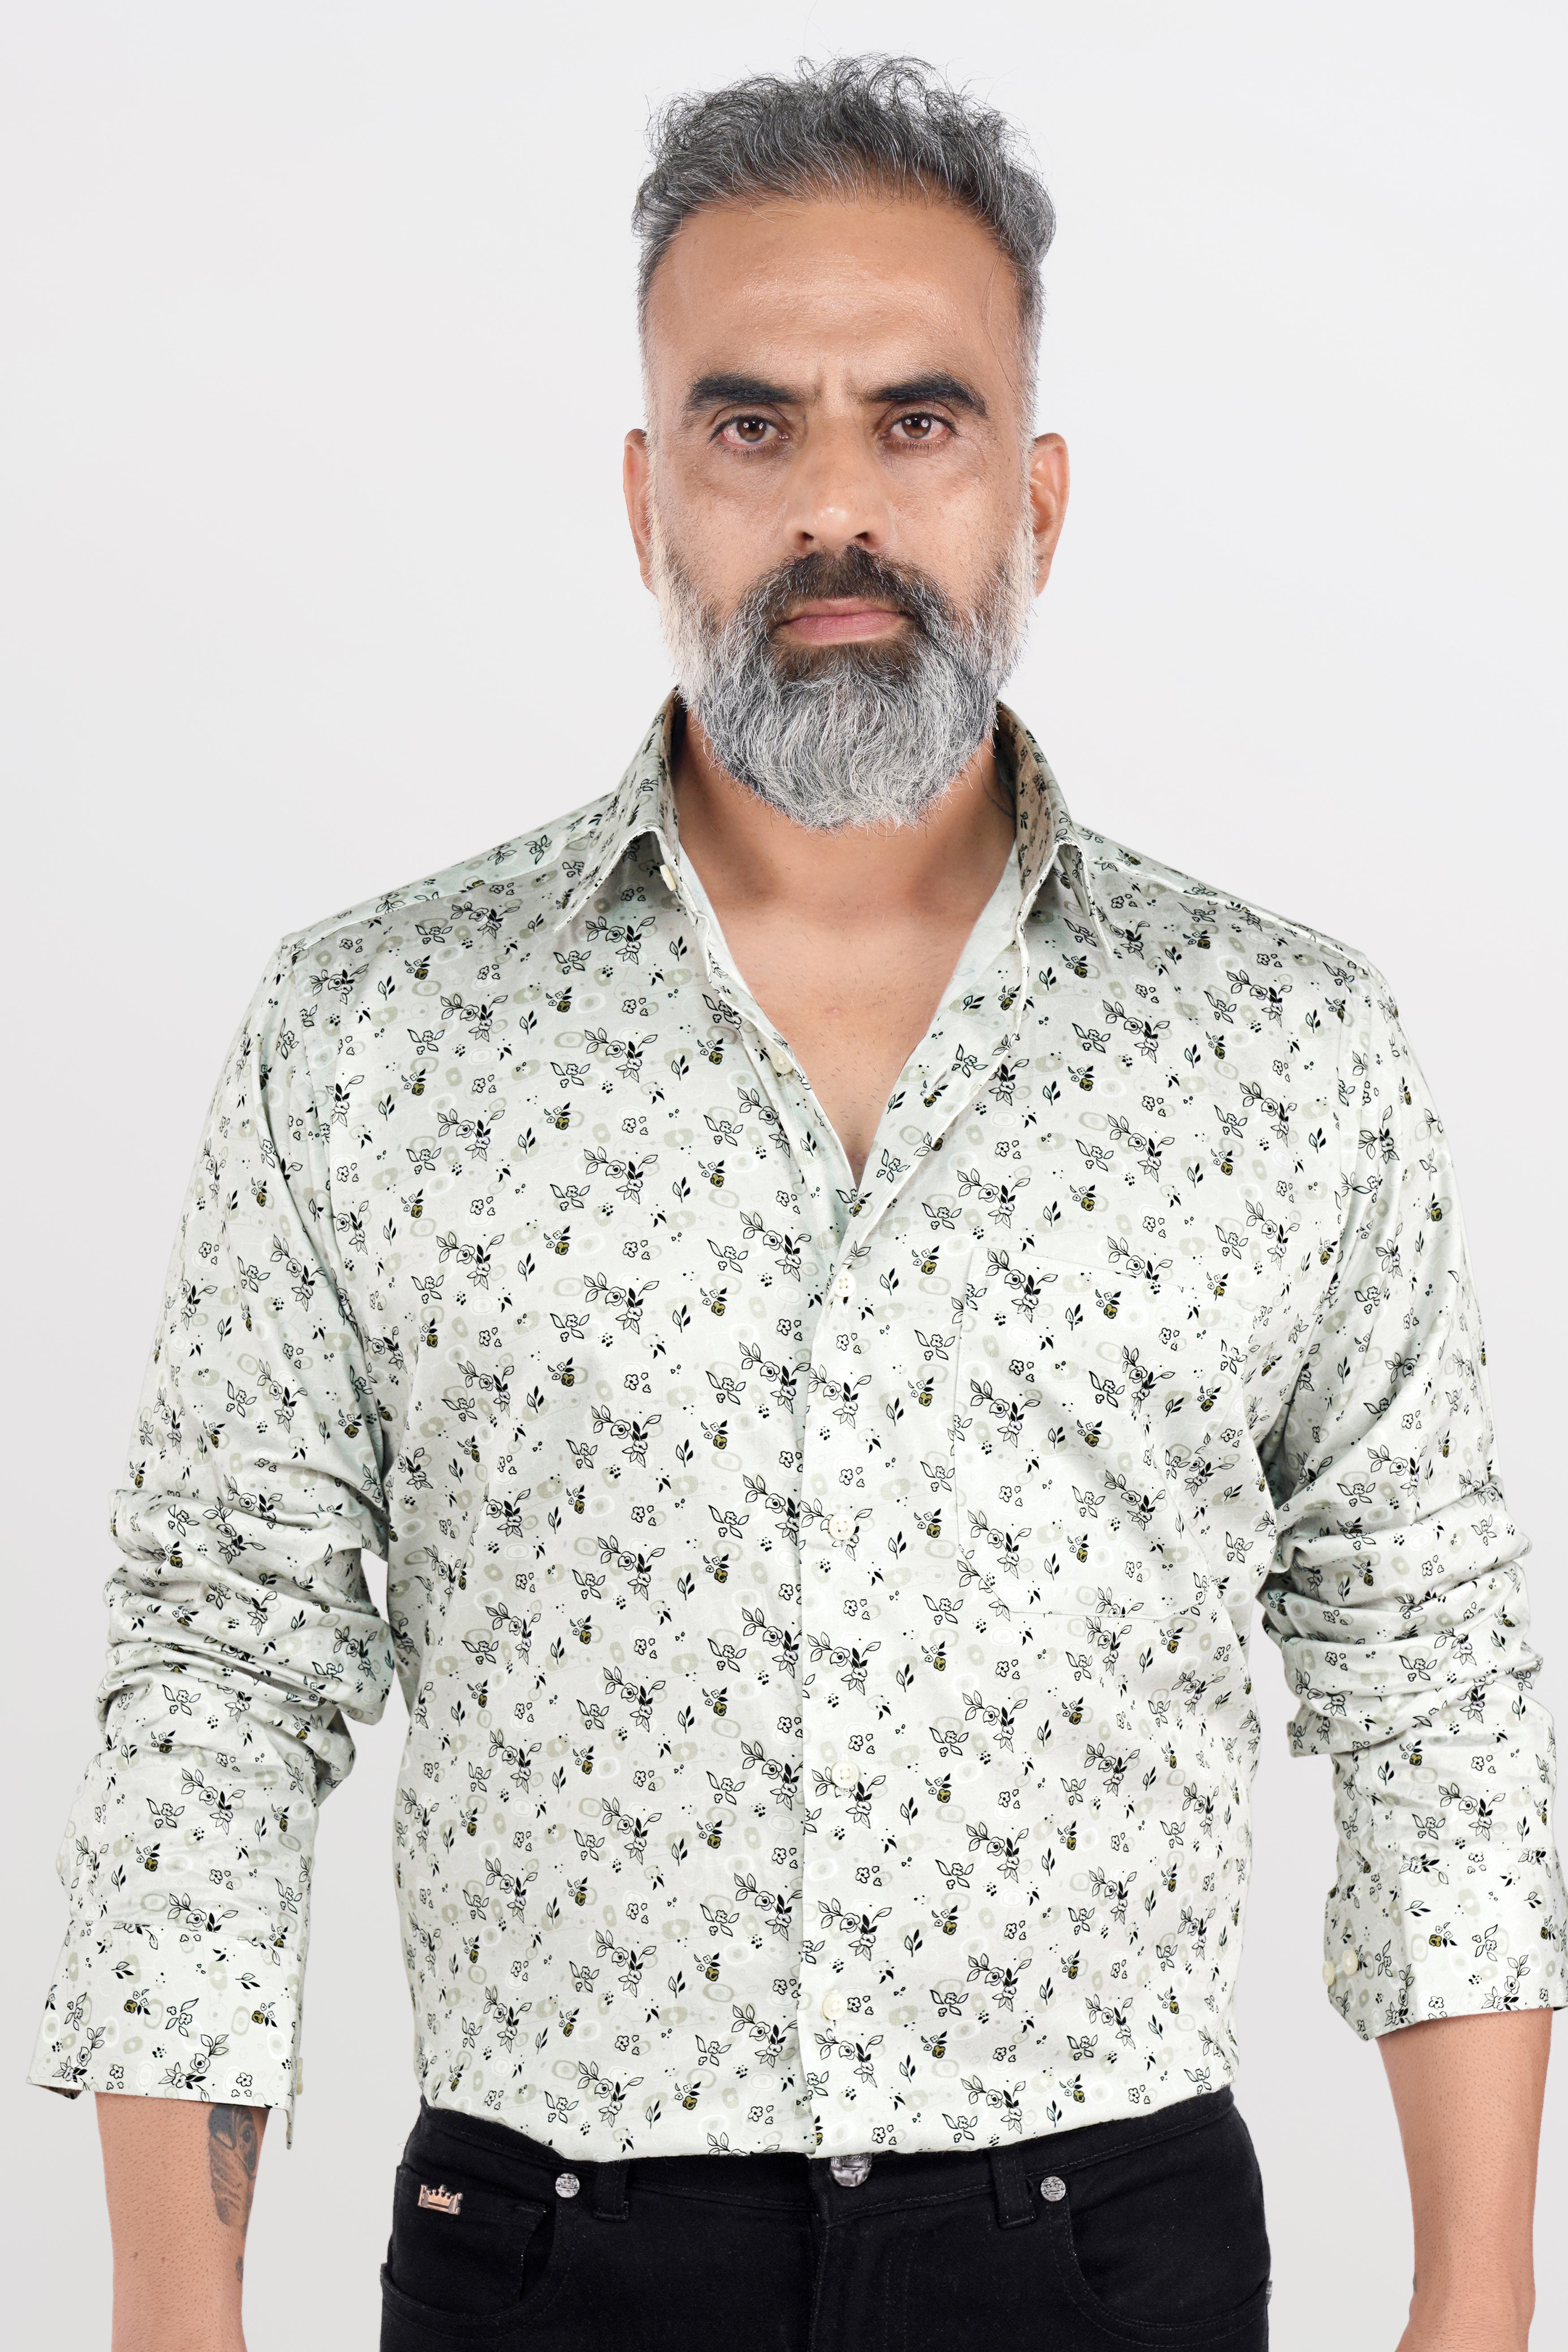 Tasman with Tealish Green Ditsy Printed Super Soft Premium Cotton Shirt